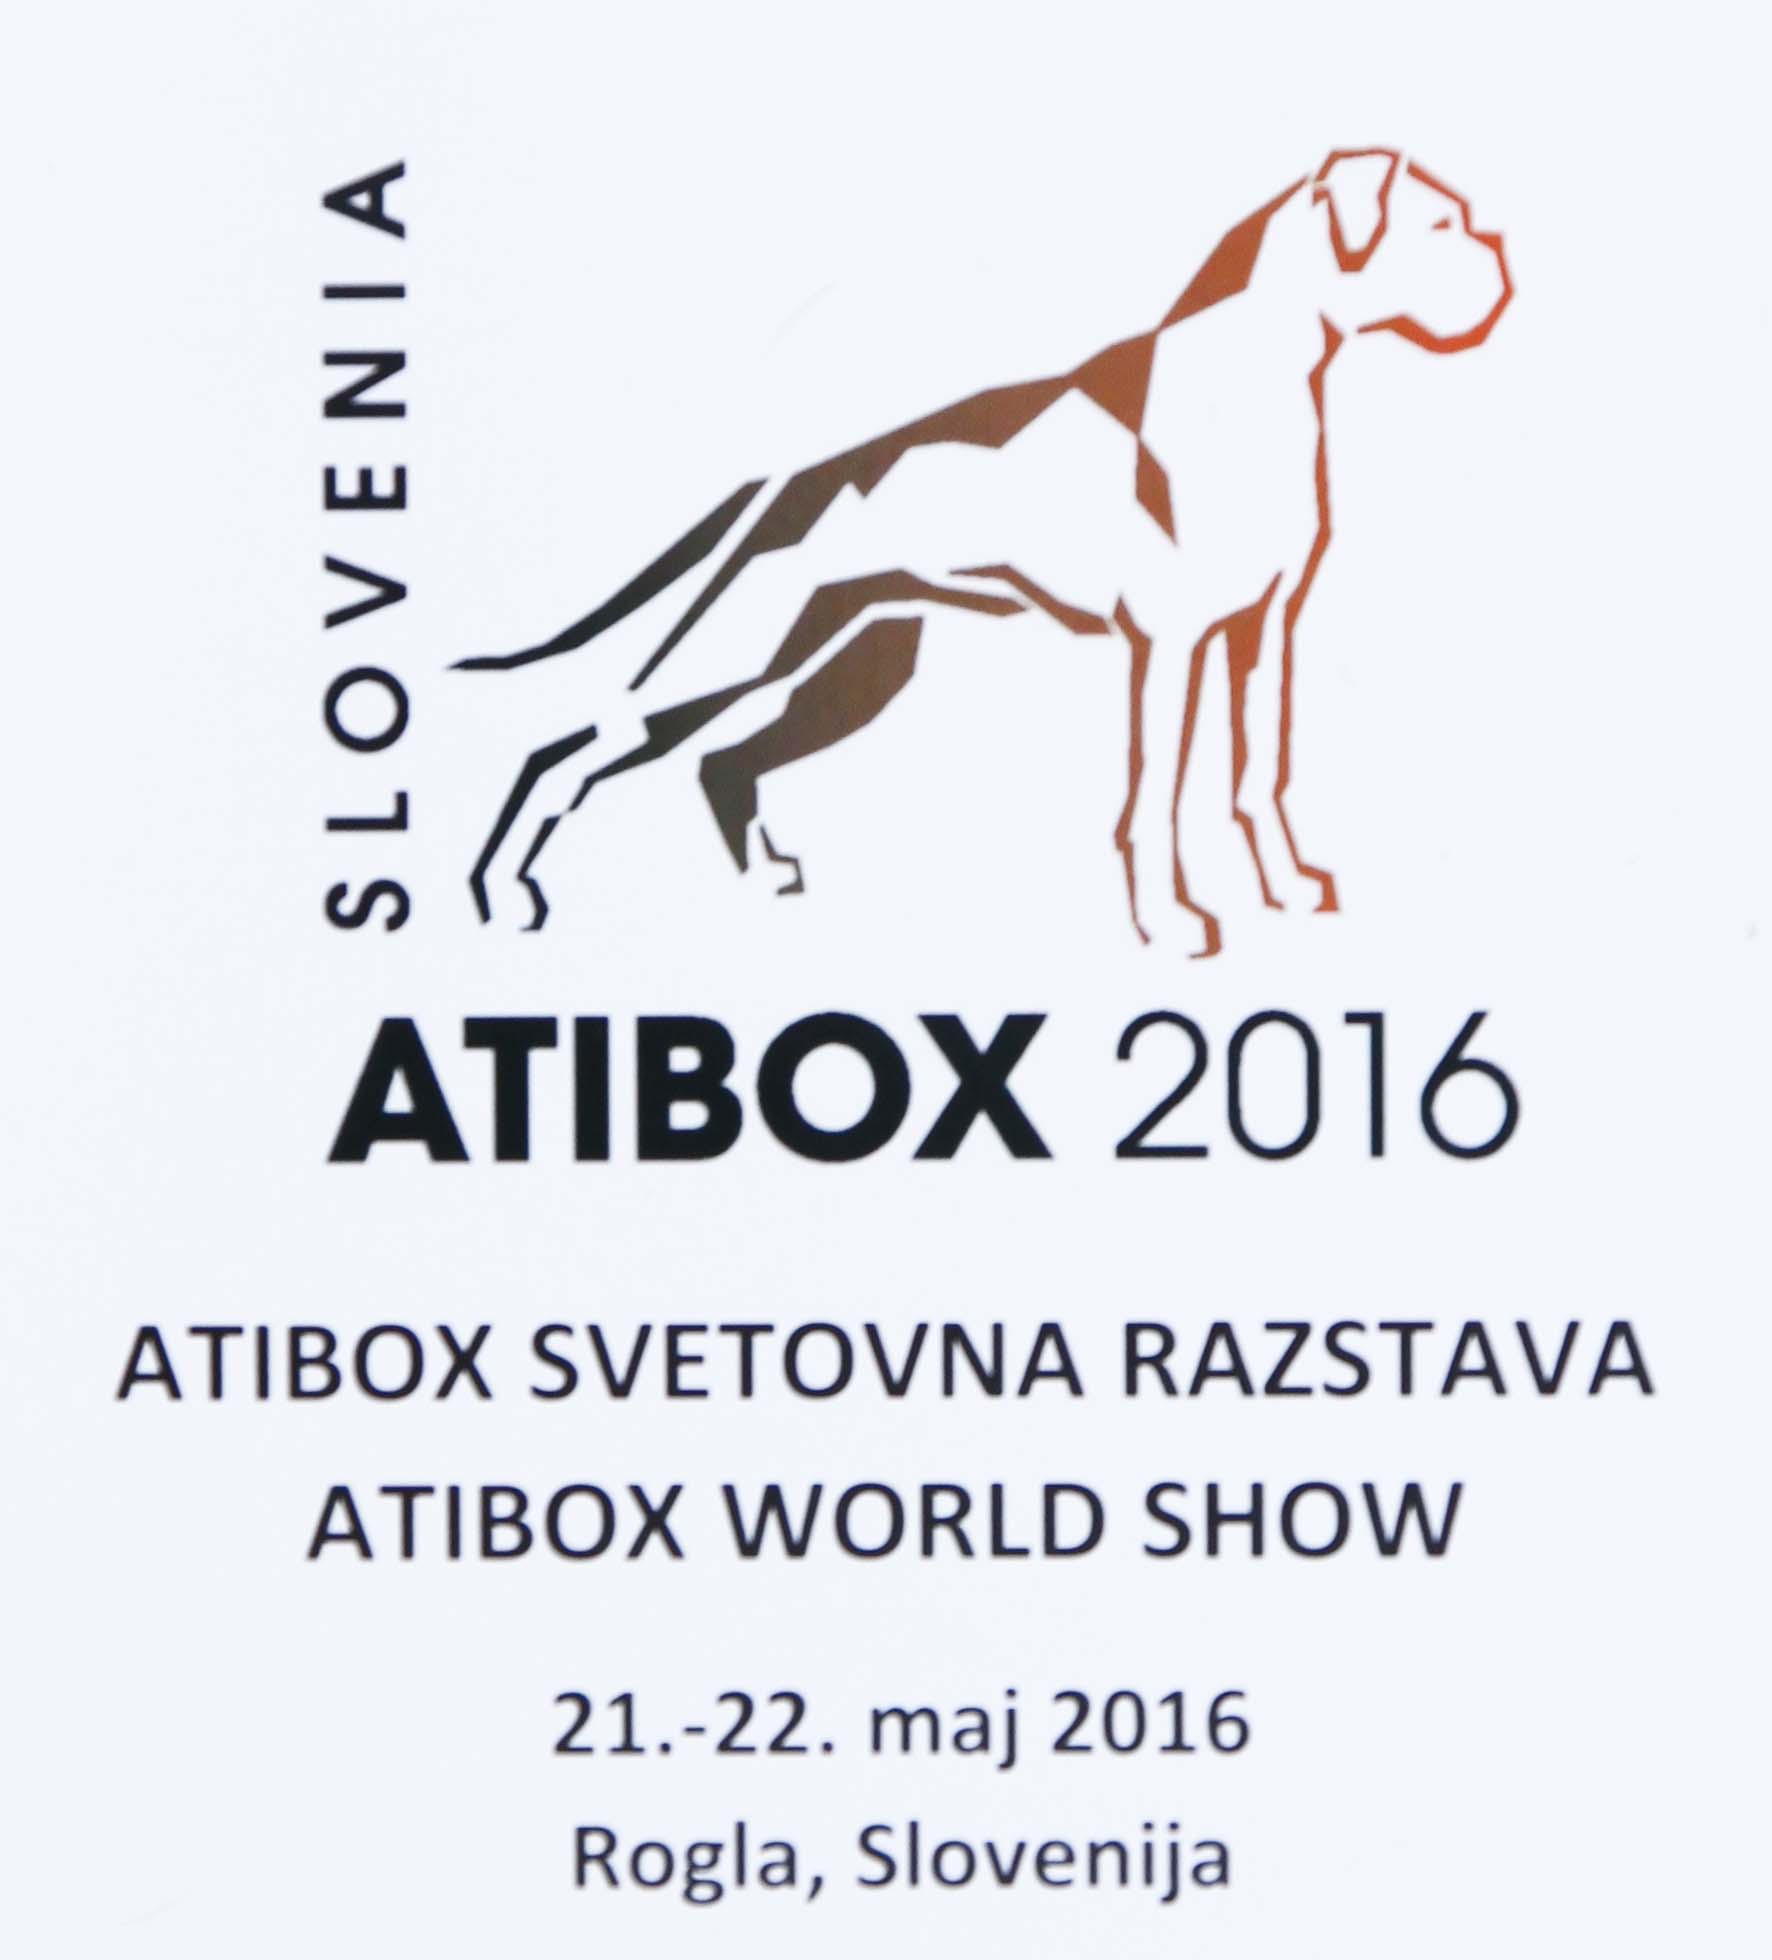 Atibox 2016